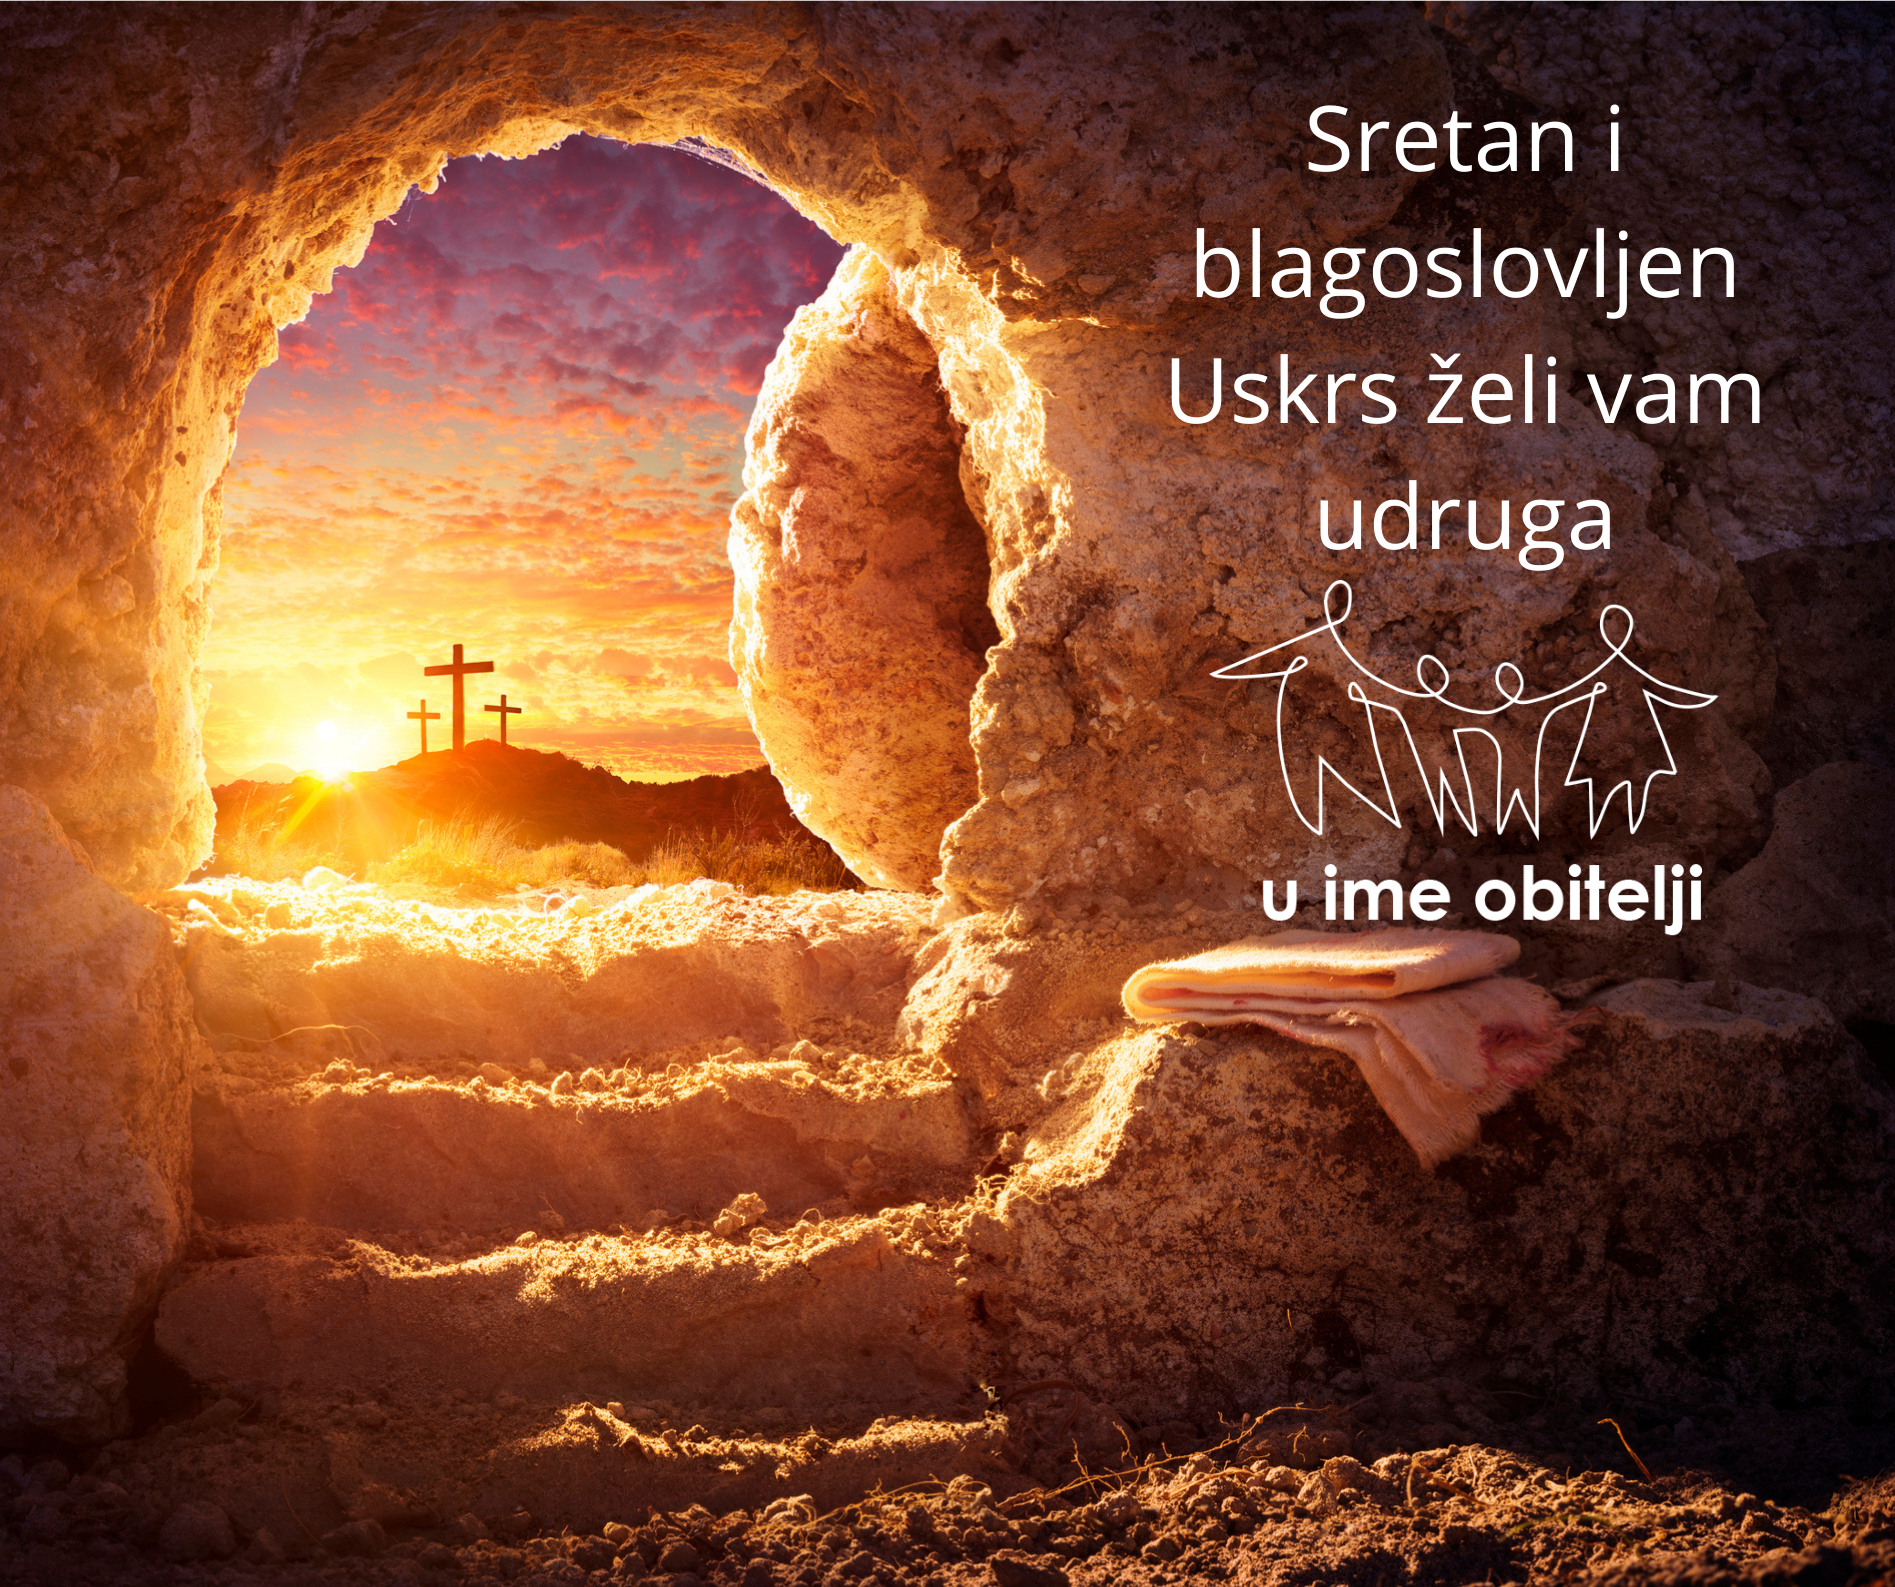 Sretan i blagoslovljen Uskrs!